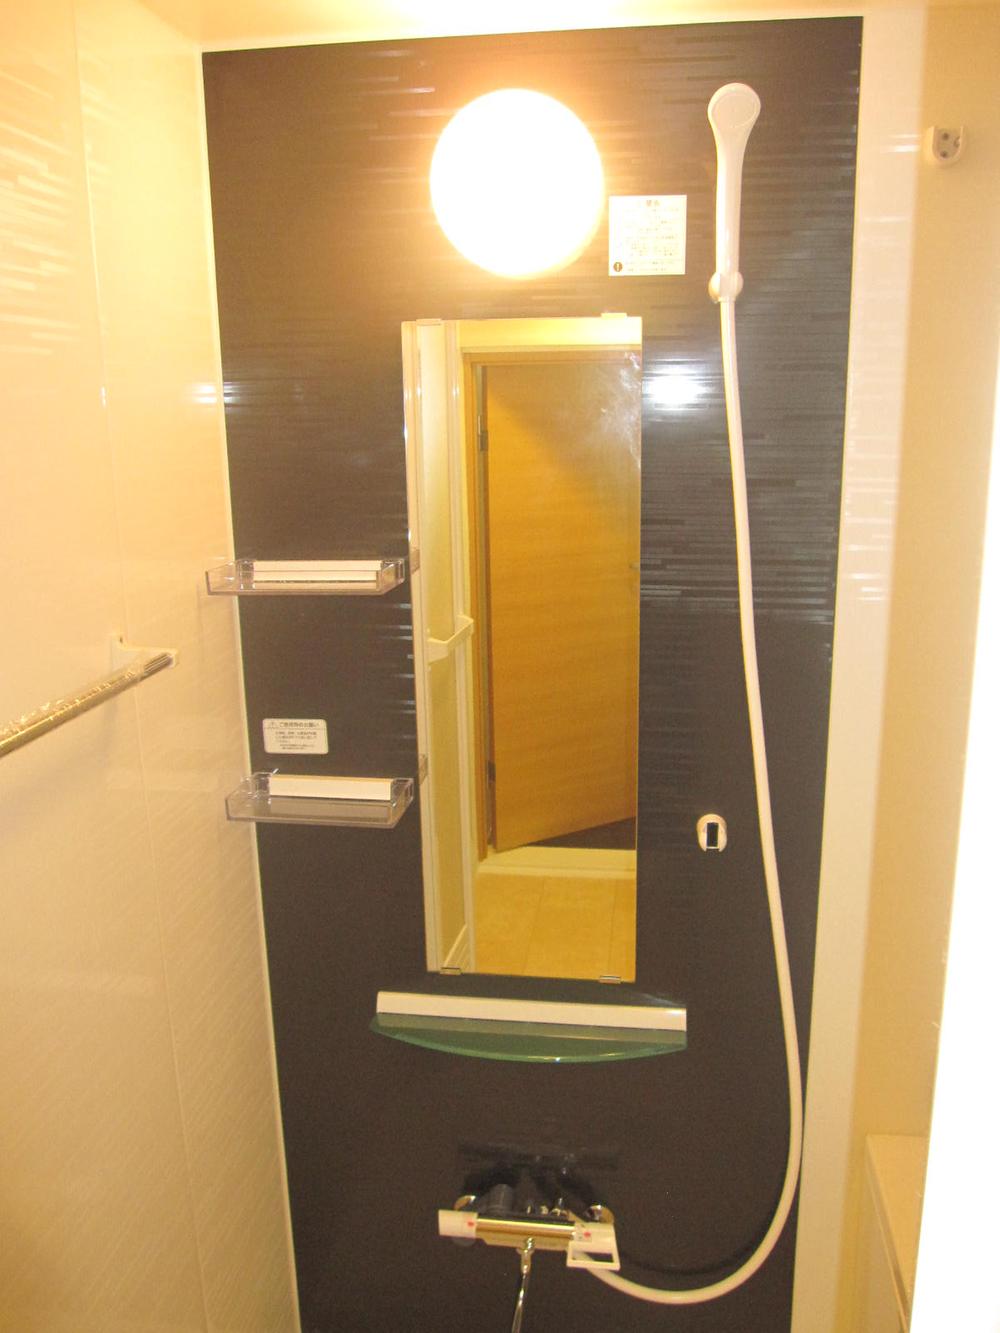 Bathroom. Unit bus new exchange settled (2013 July)